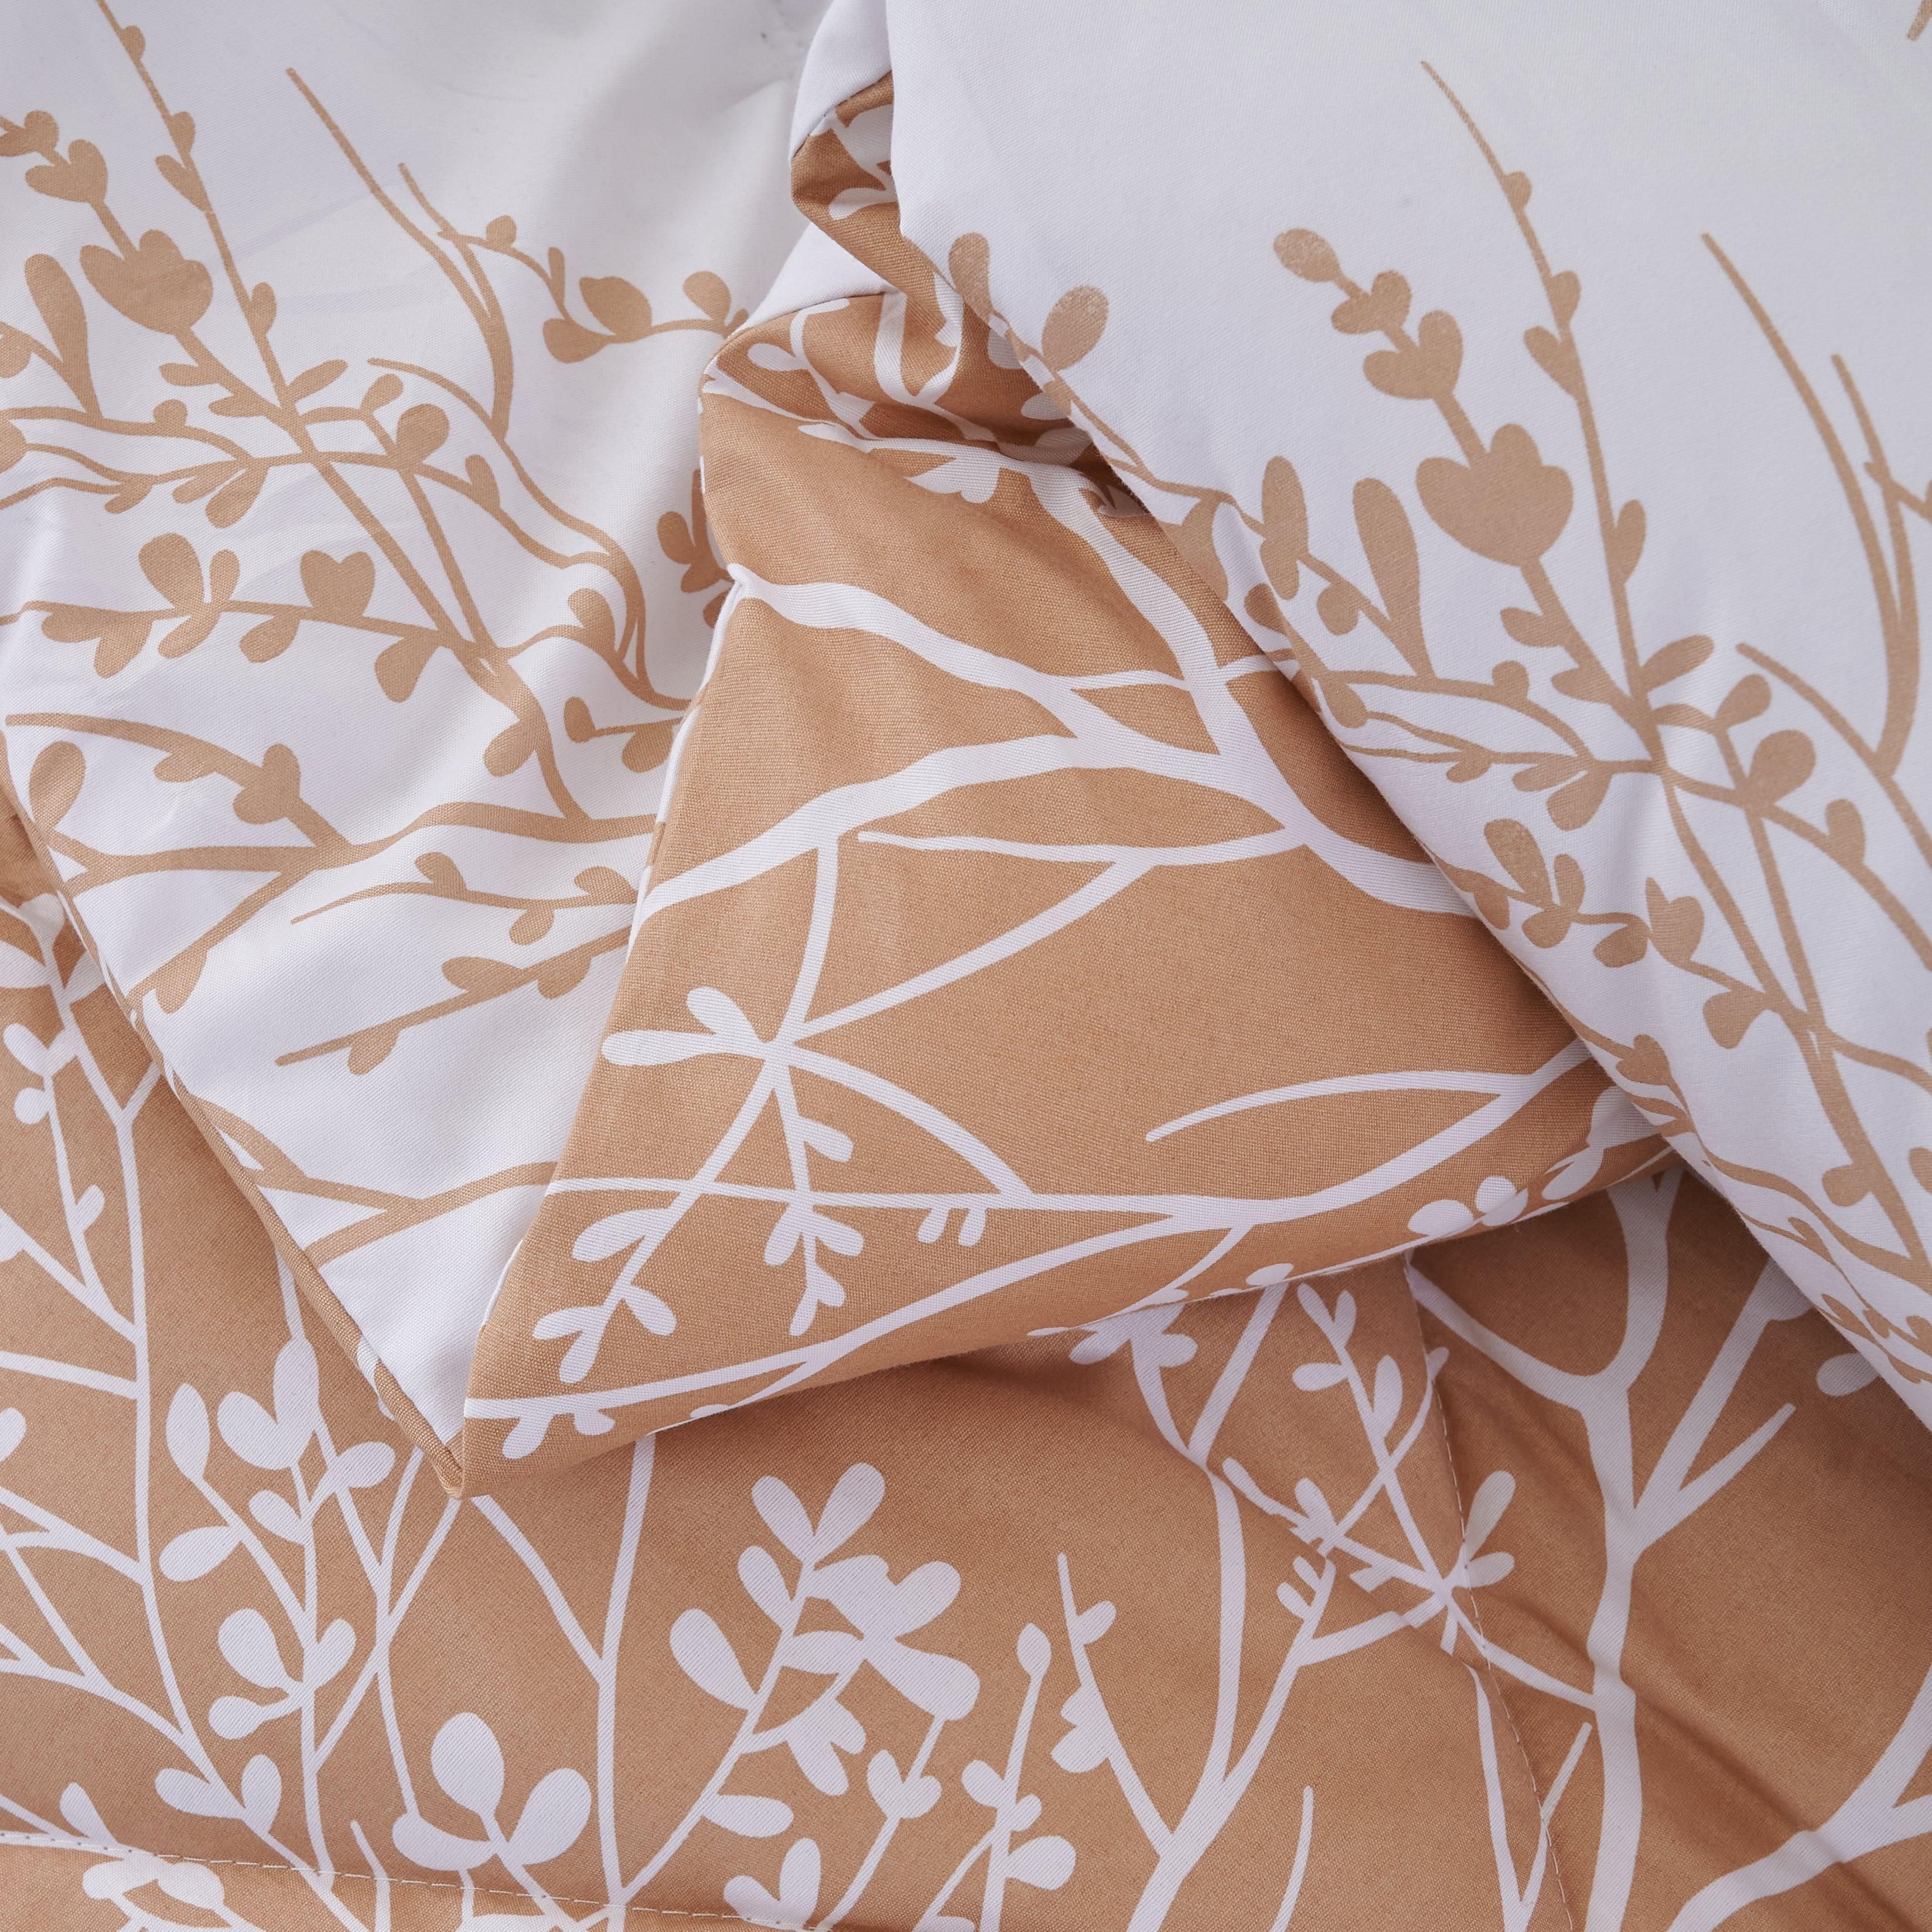 Foliage Reversible Comforter Set + Two Free Sham Pillows - Spirit Linen - Taupe